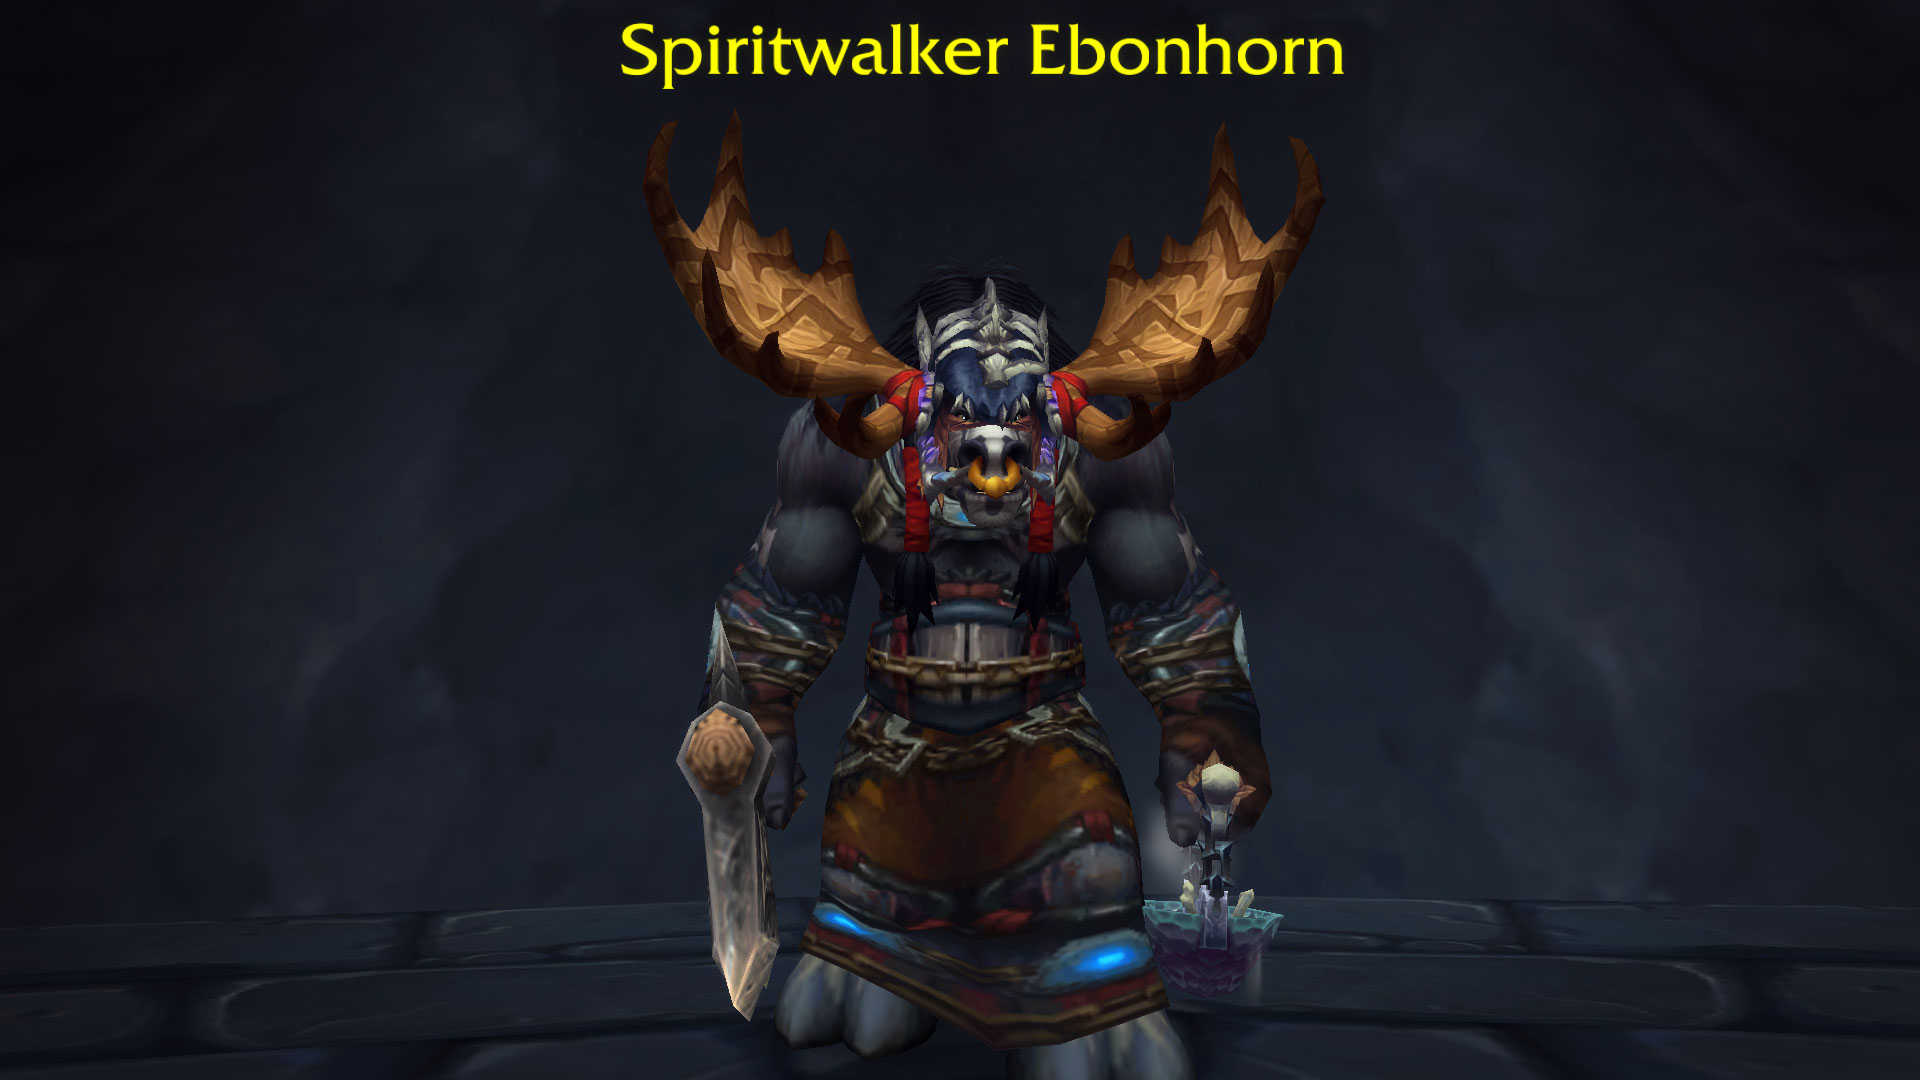 Spiritwalker ebonhorn